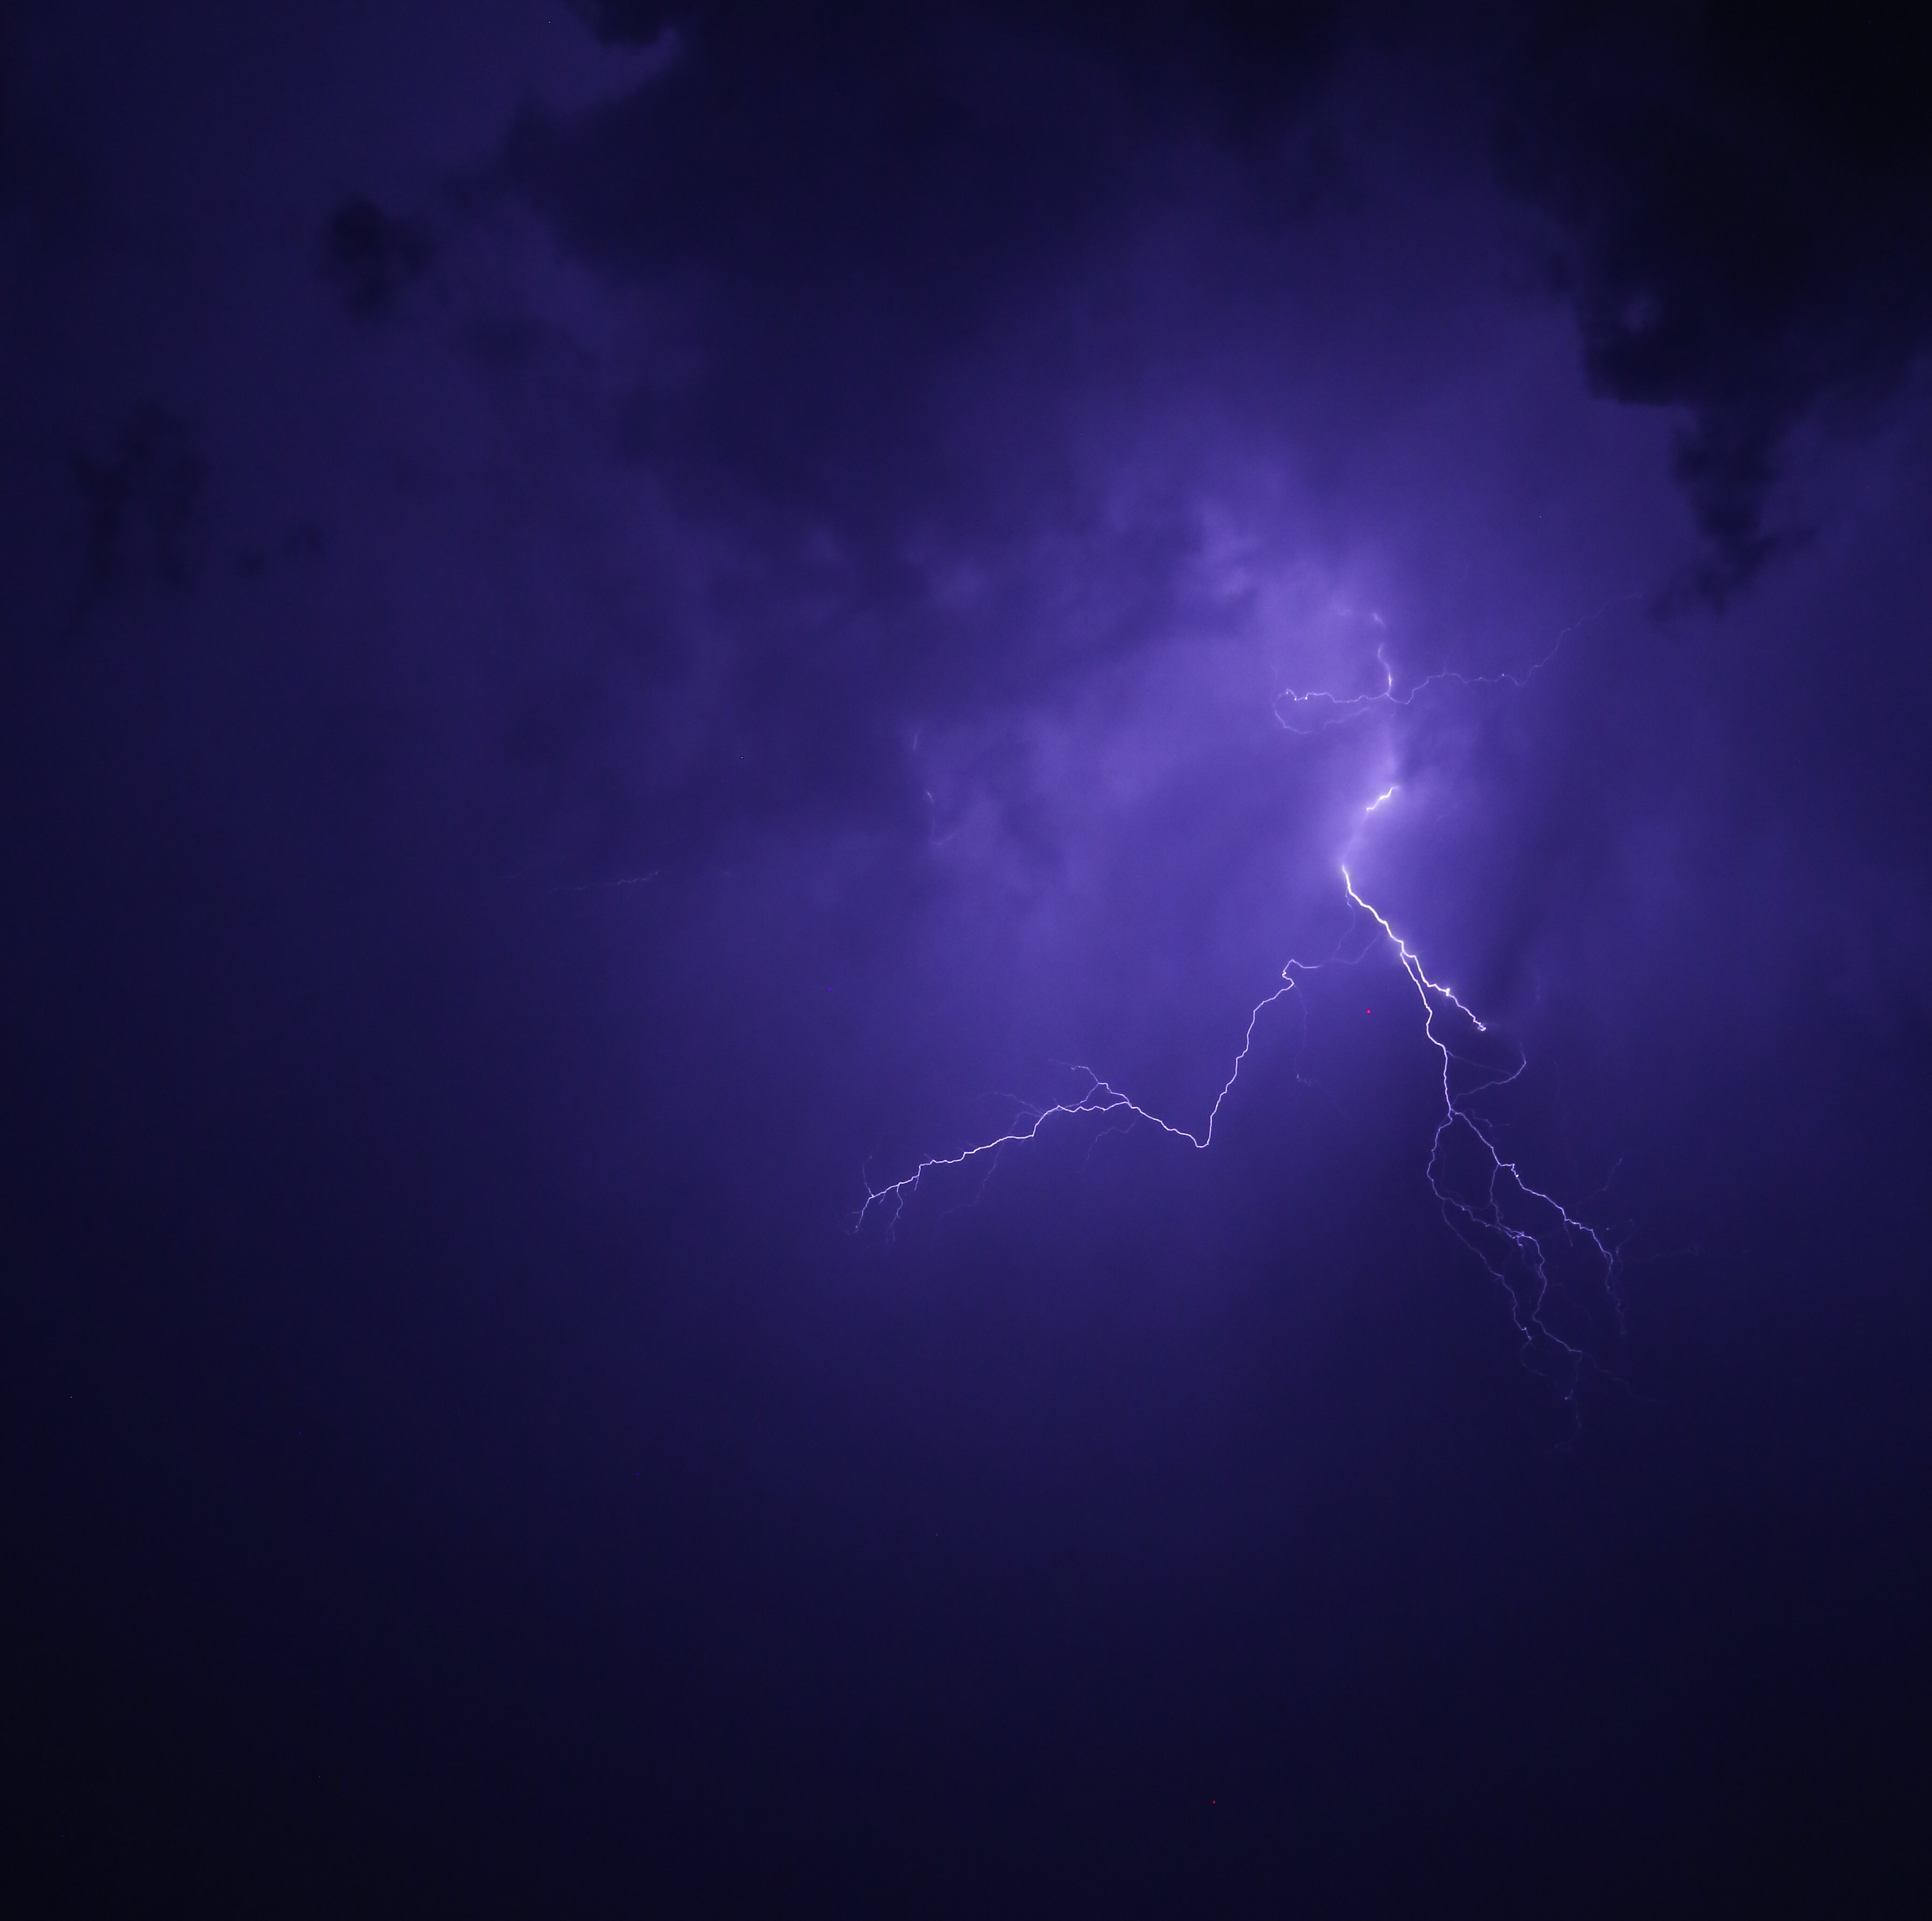 Image of an lightning